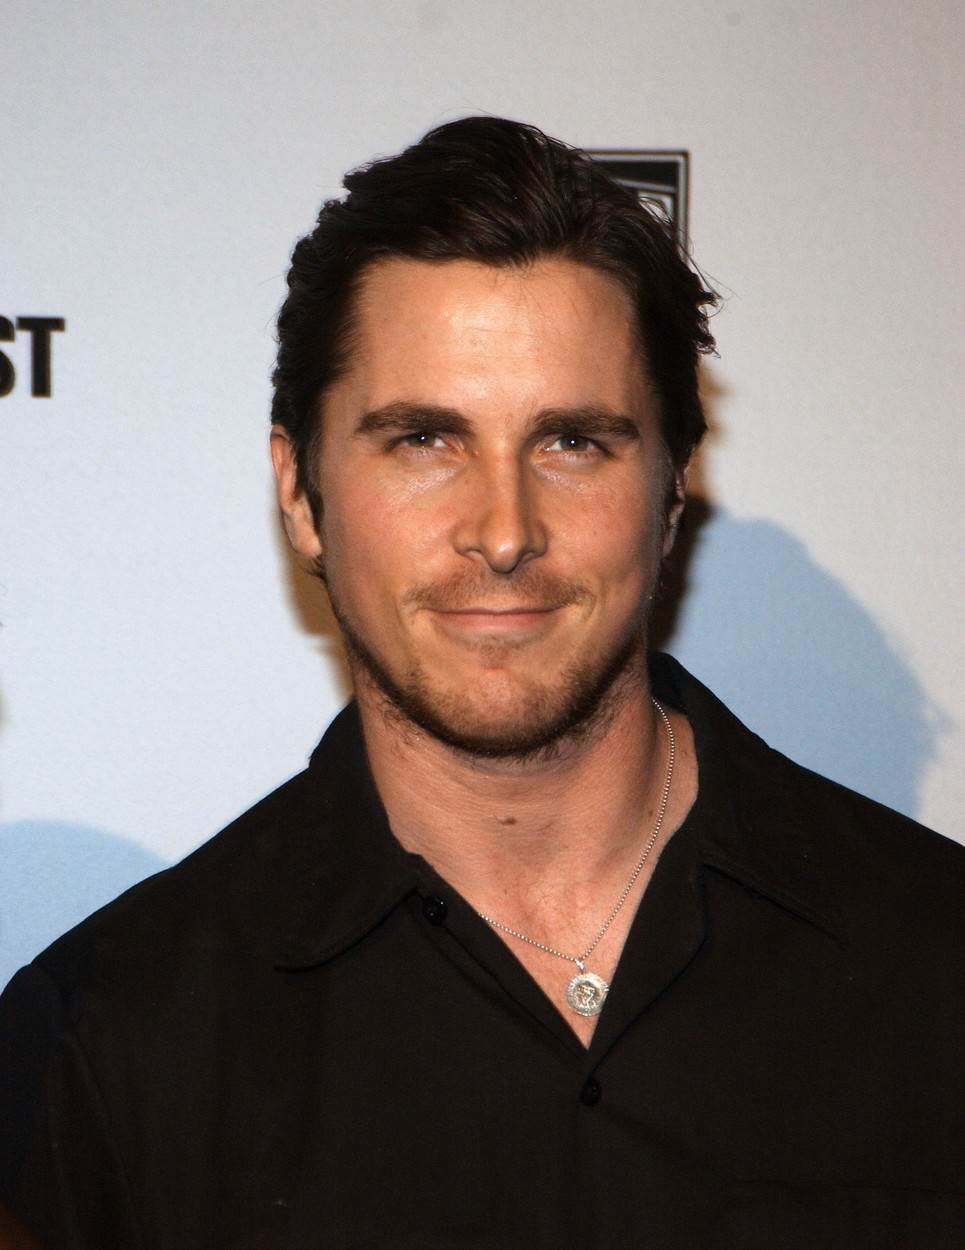 Christian Bale kralj je holivudskih transformacija